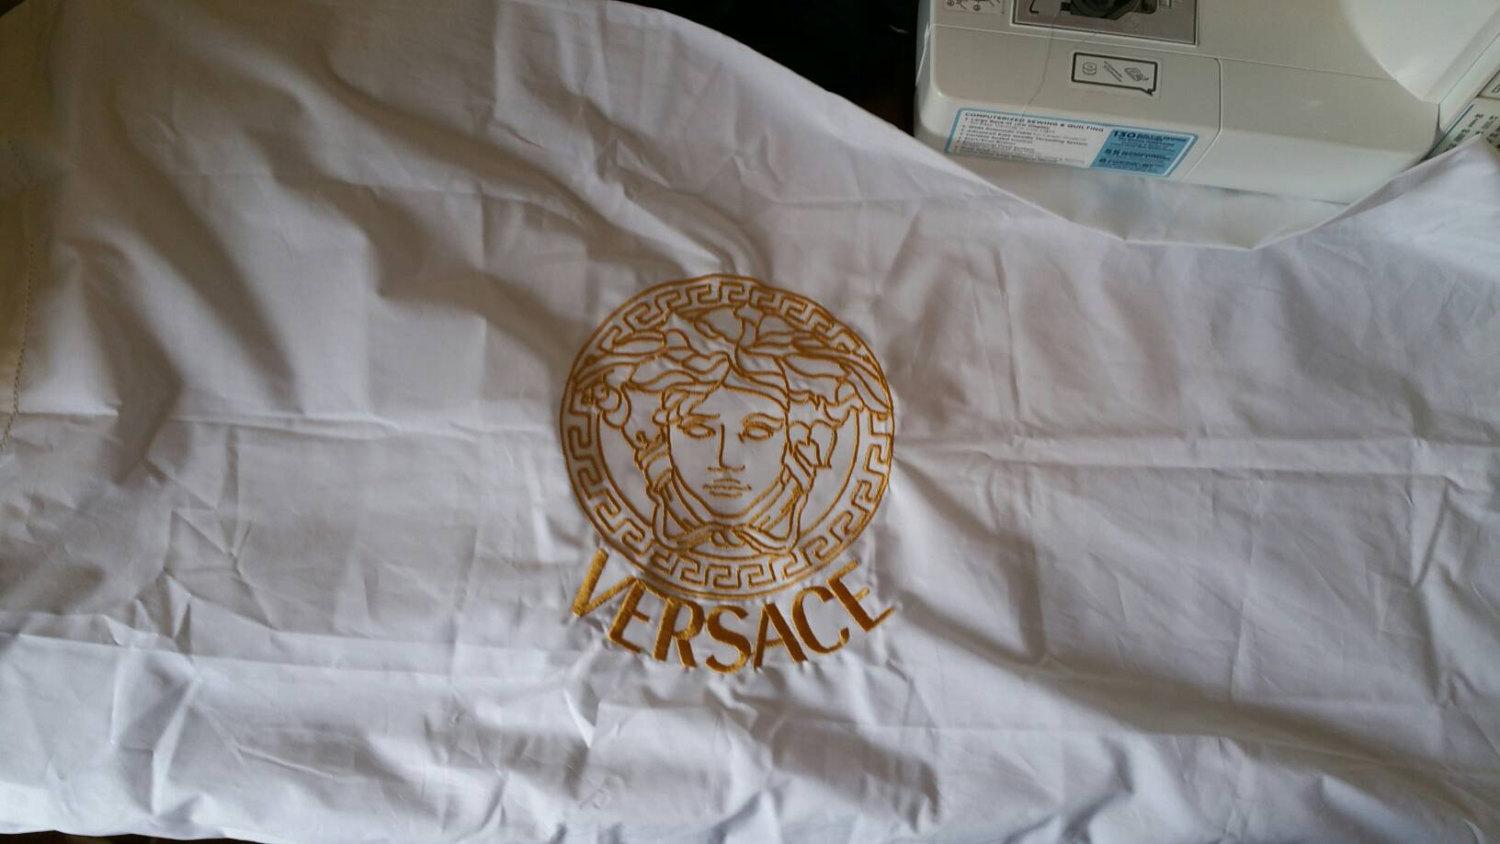 Versace logo machine embroidery design